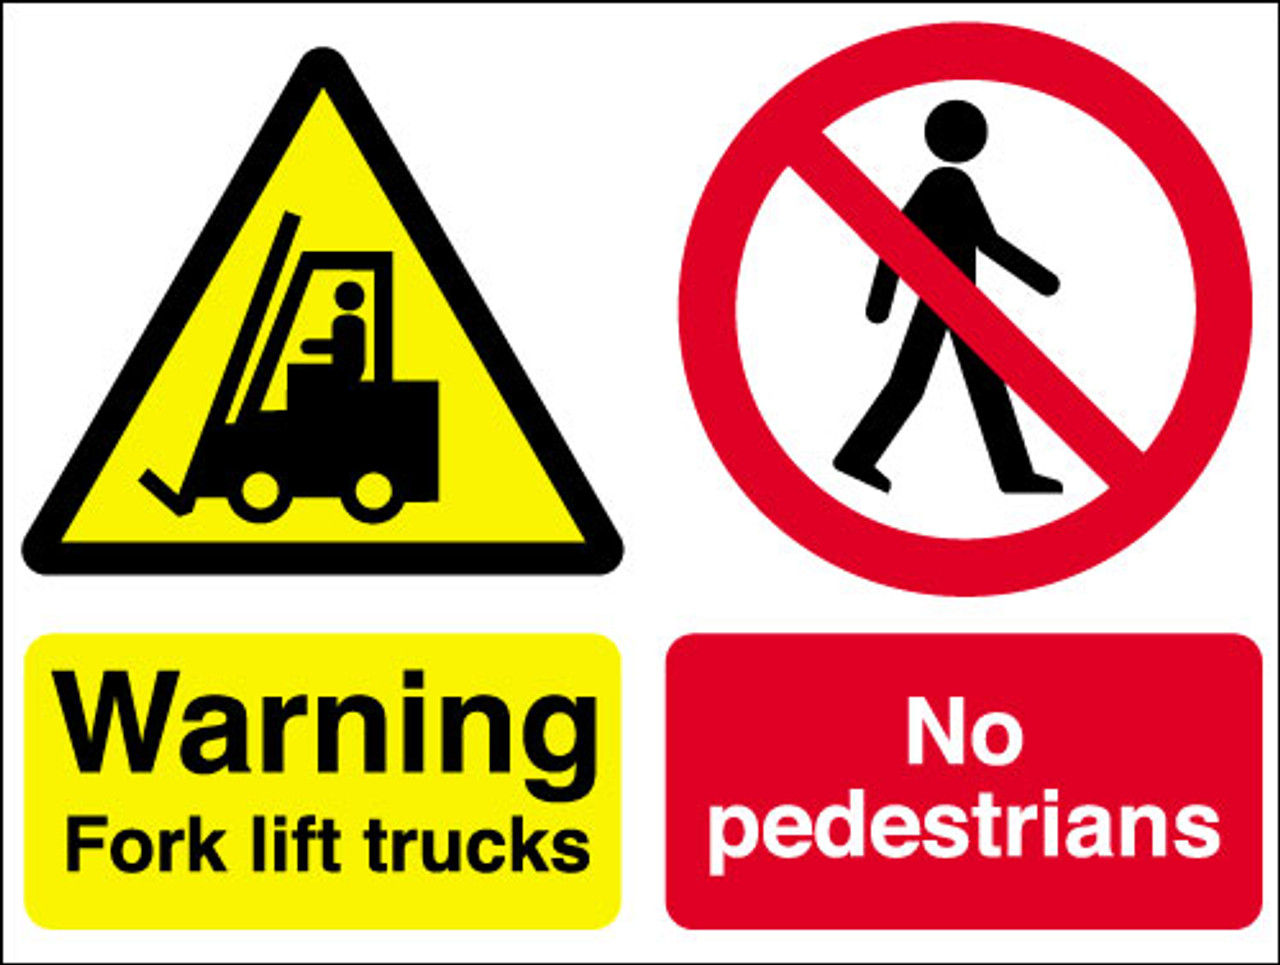 Warning fork lift trucks  No pedestrians sign